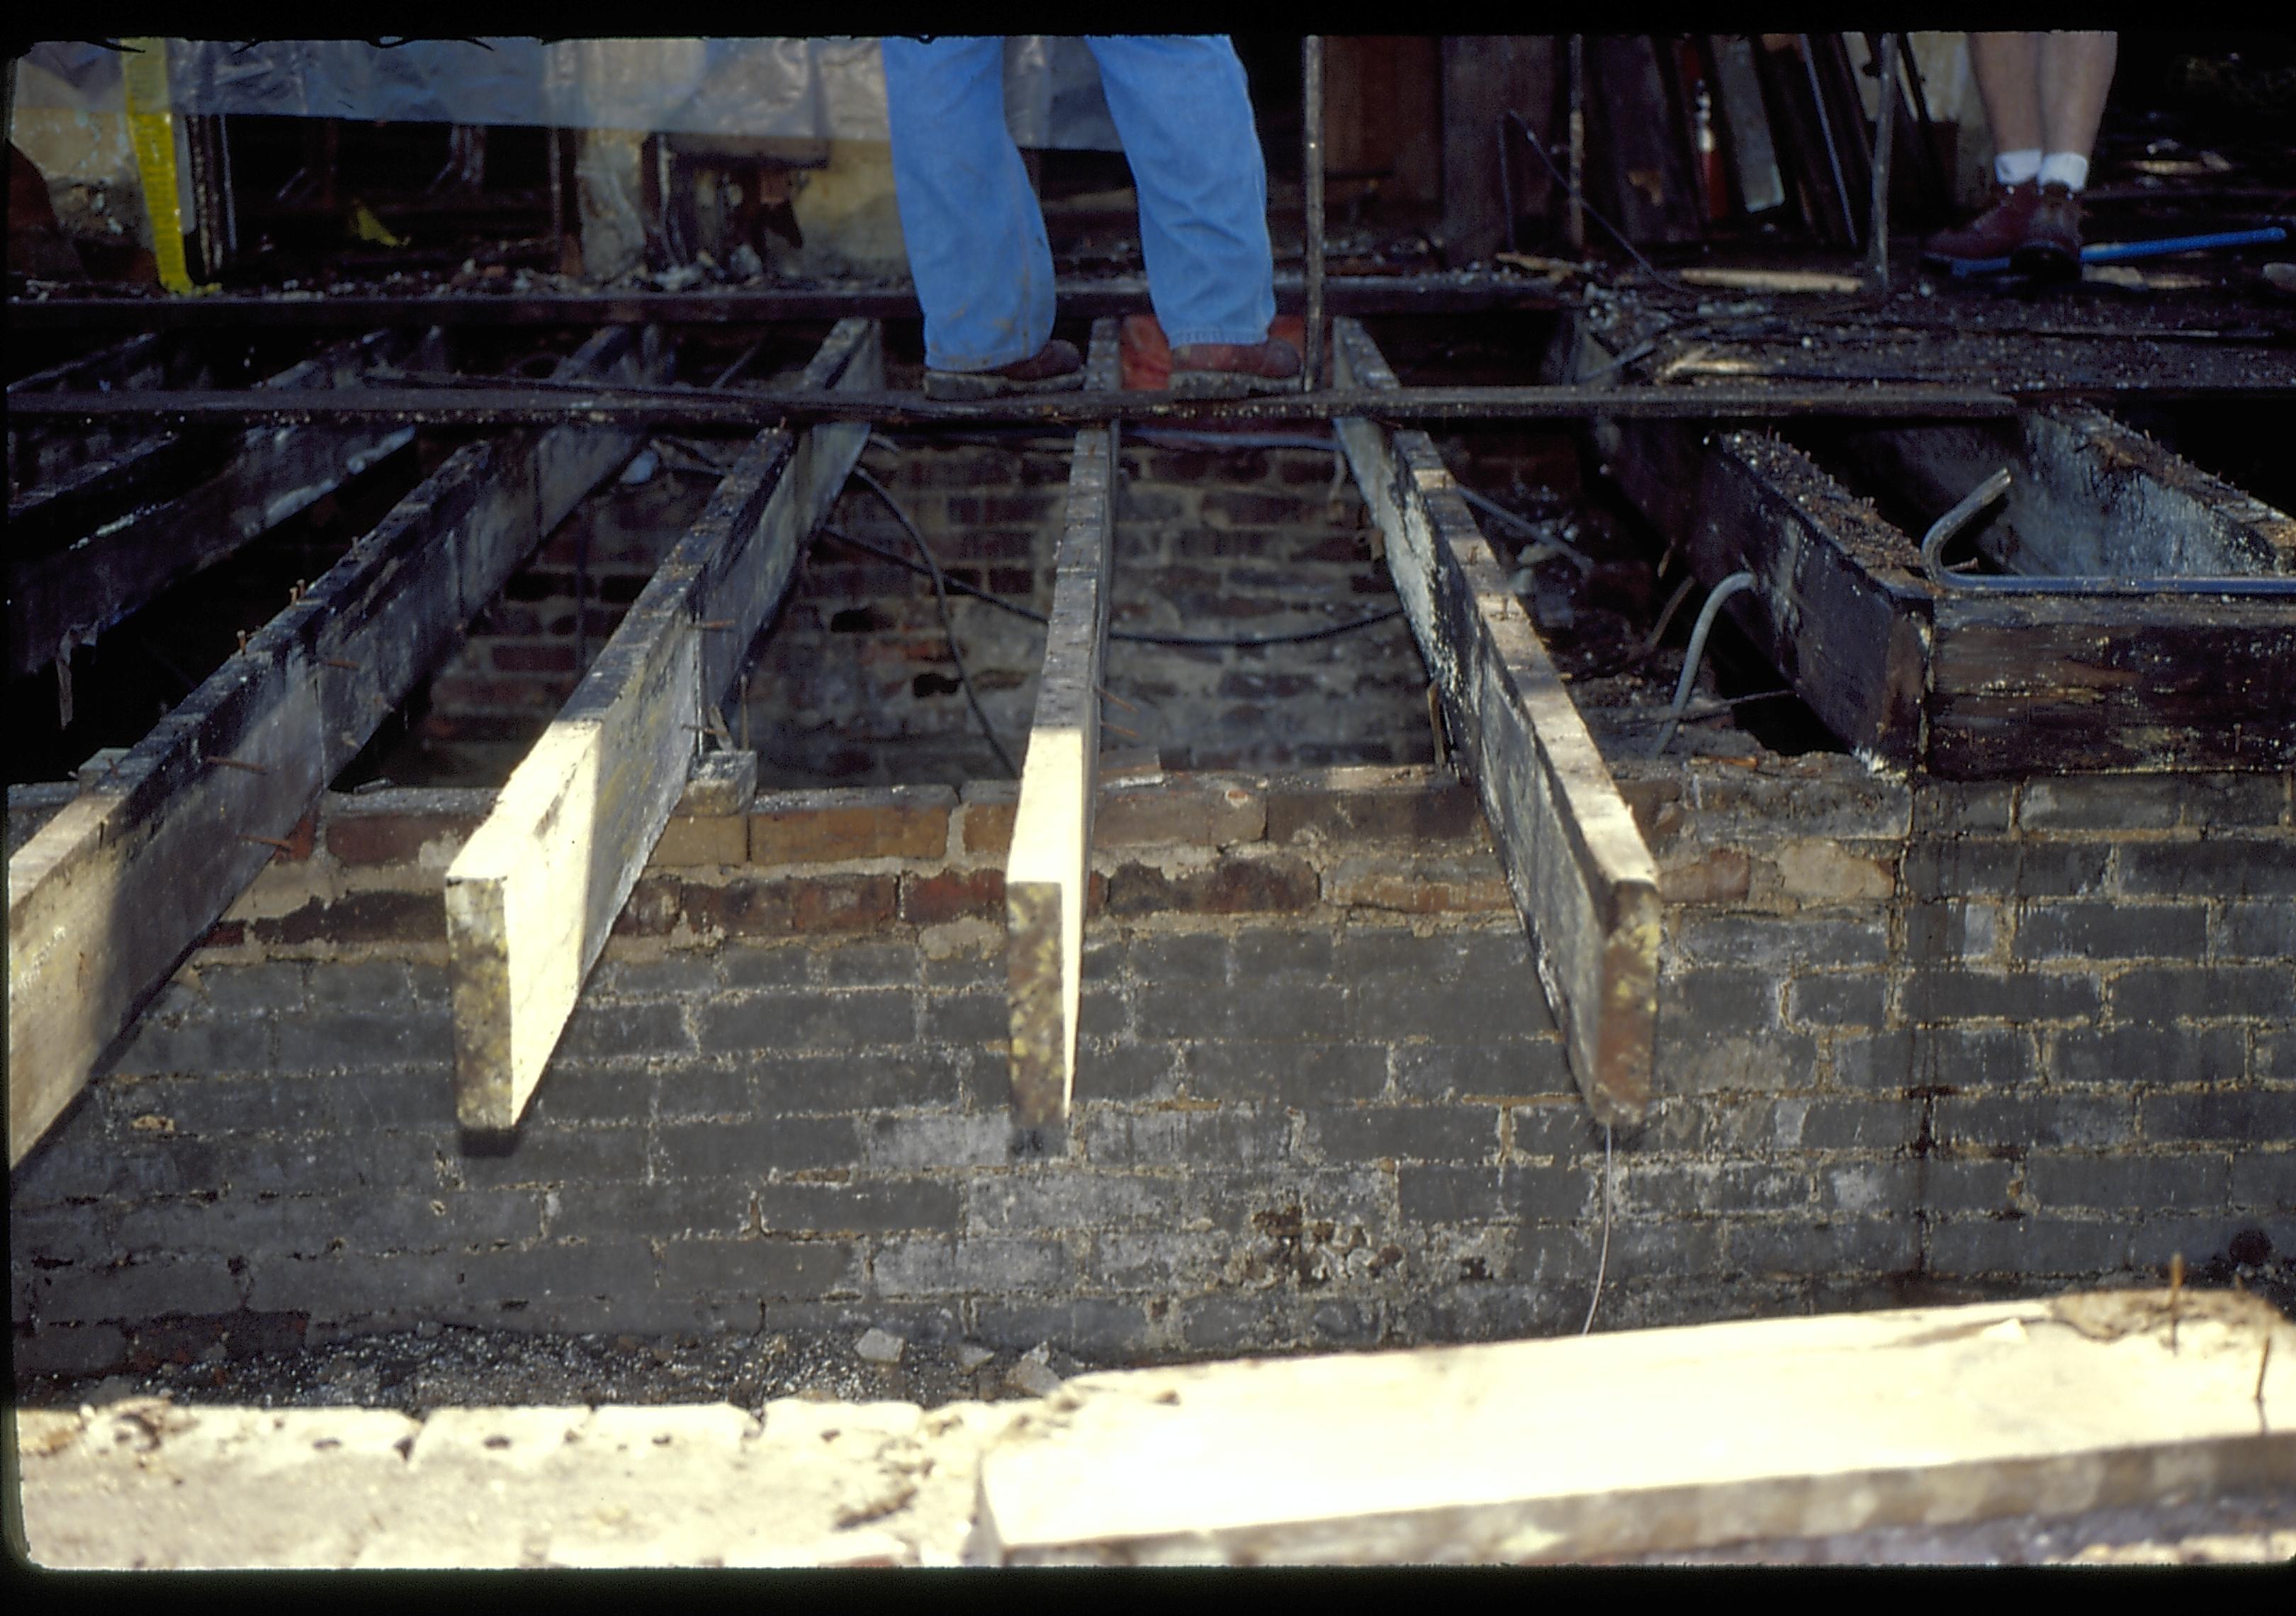 Porch planks LIHO NHS- Arnold House, HS-20 Roll #1 7/17-7/23/96, exp 31 Arnold House, restoration